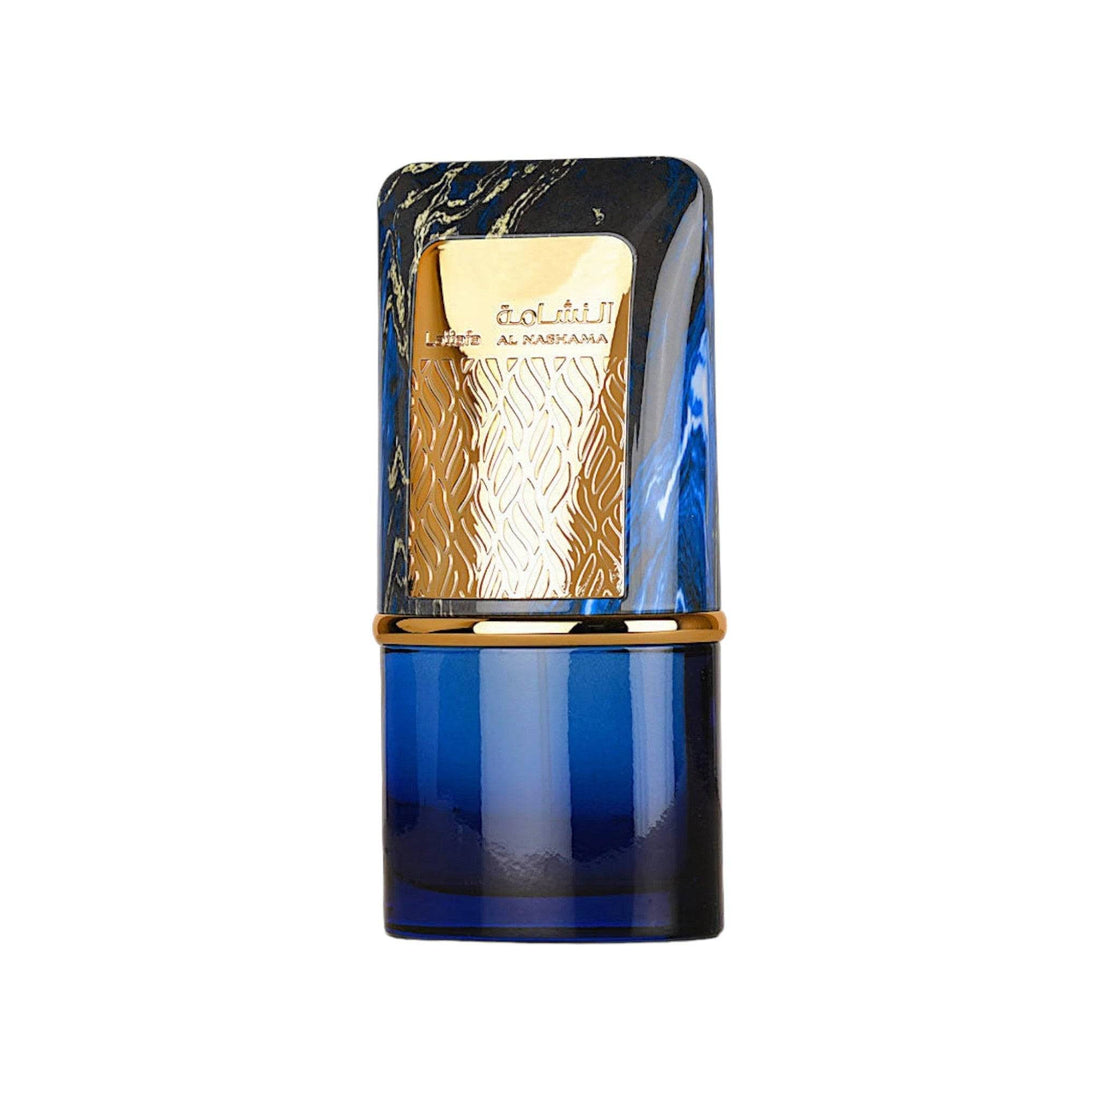 AL Nashama Caprice EDP by Lattafa Perfumes in a 100ml bottle, showcasing a blend of spicy cardamom, fresh bergamot, and rich woody notes.